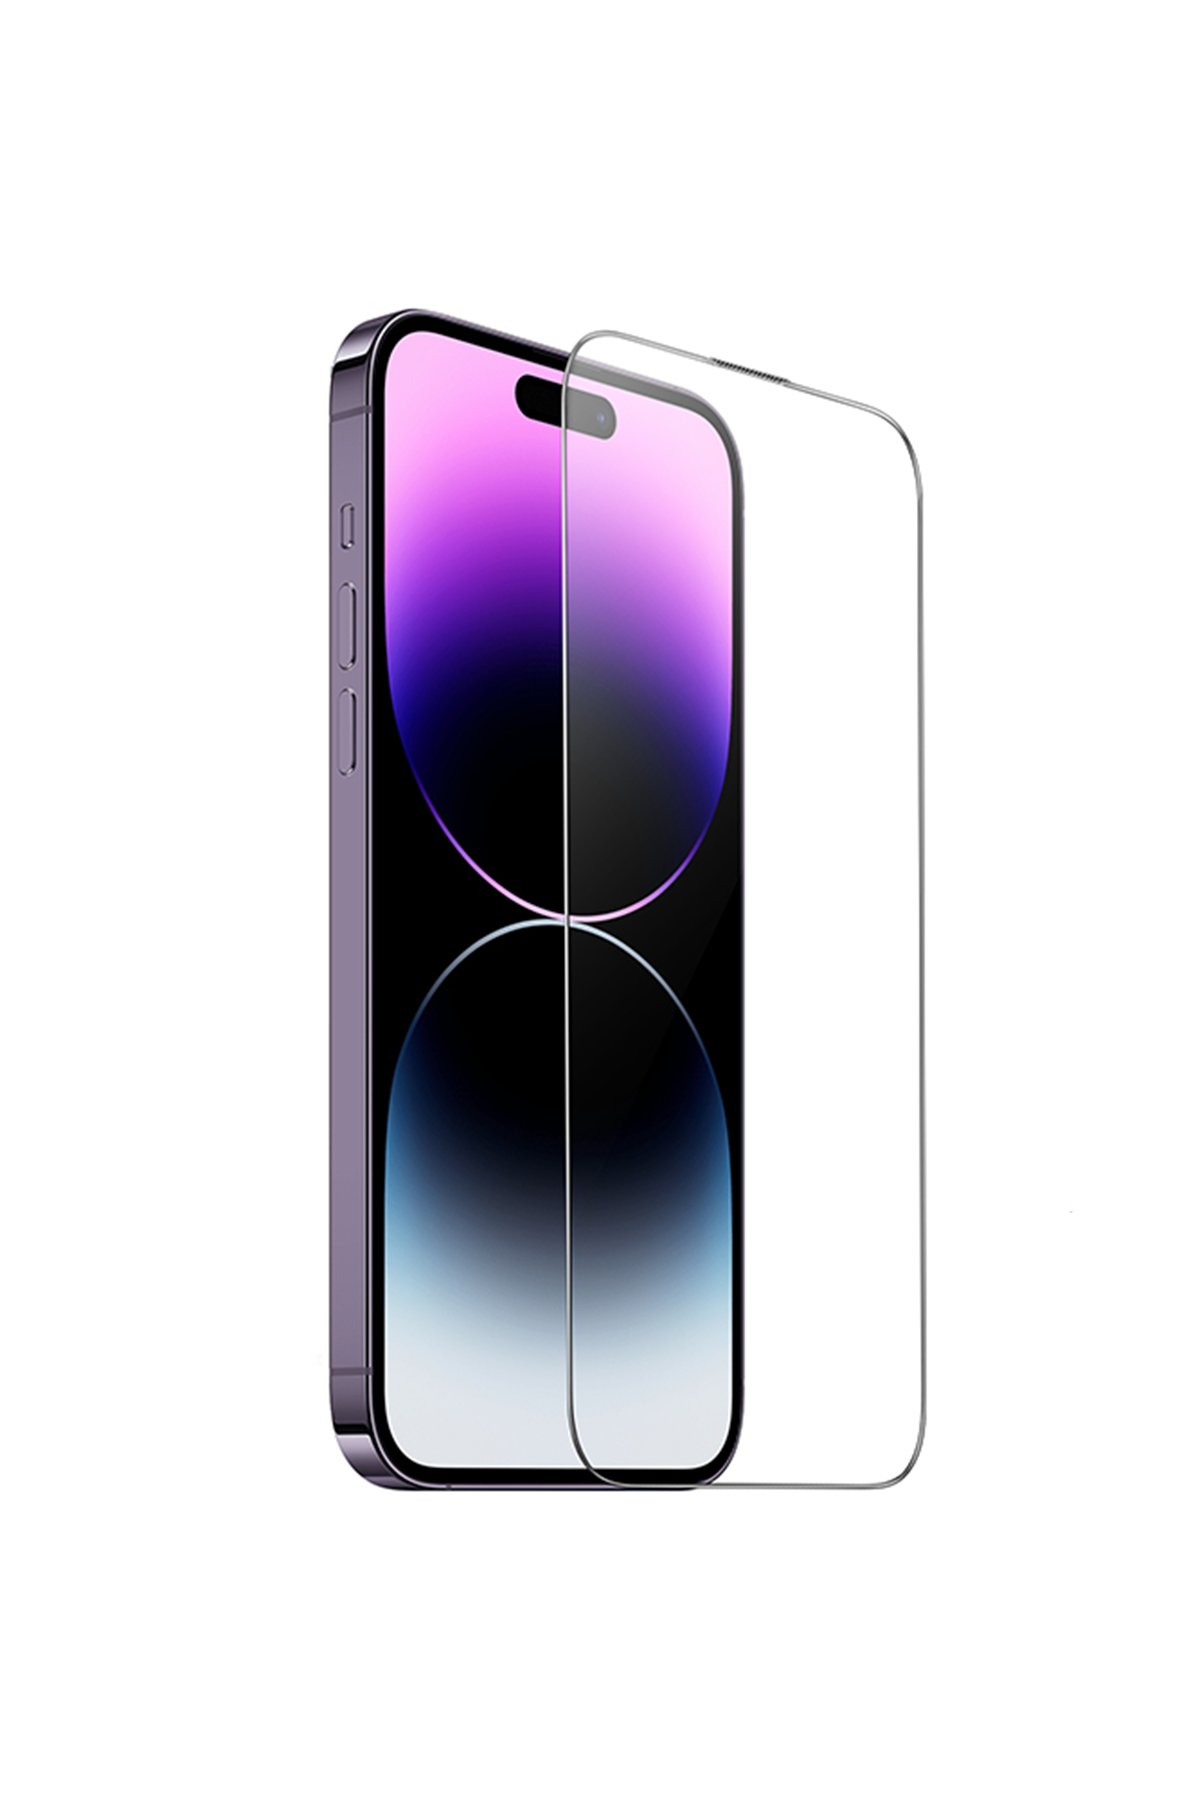 Hoco iPhone 14 Pro 9D Dustproof Hayalet Cam Ekran Koruyucu - Siyah